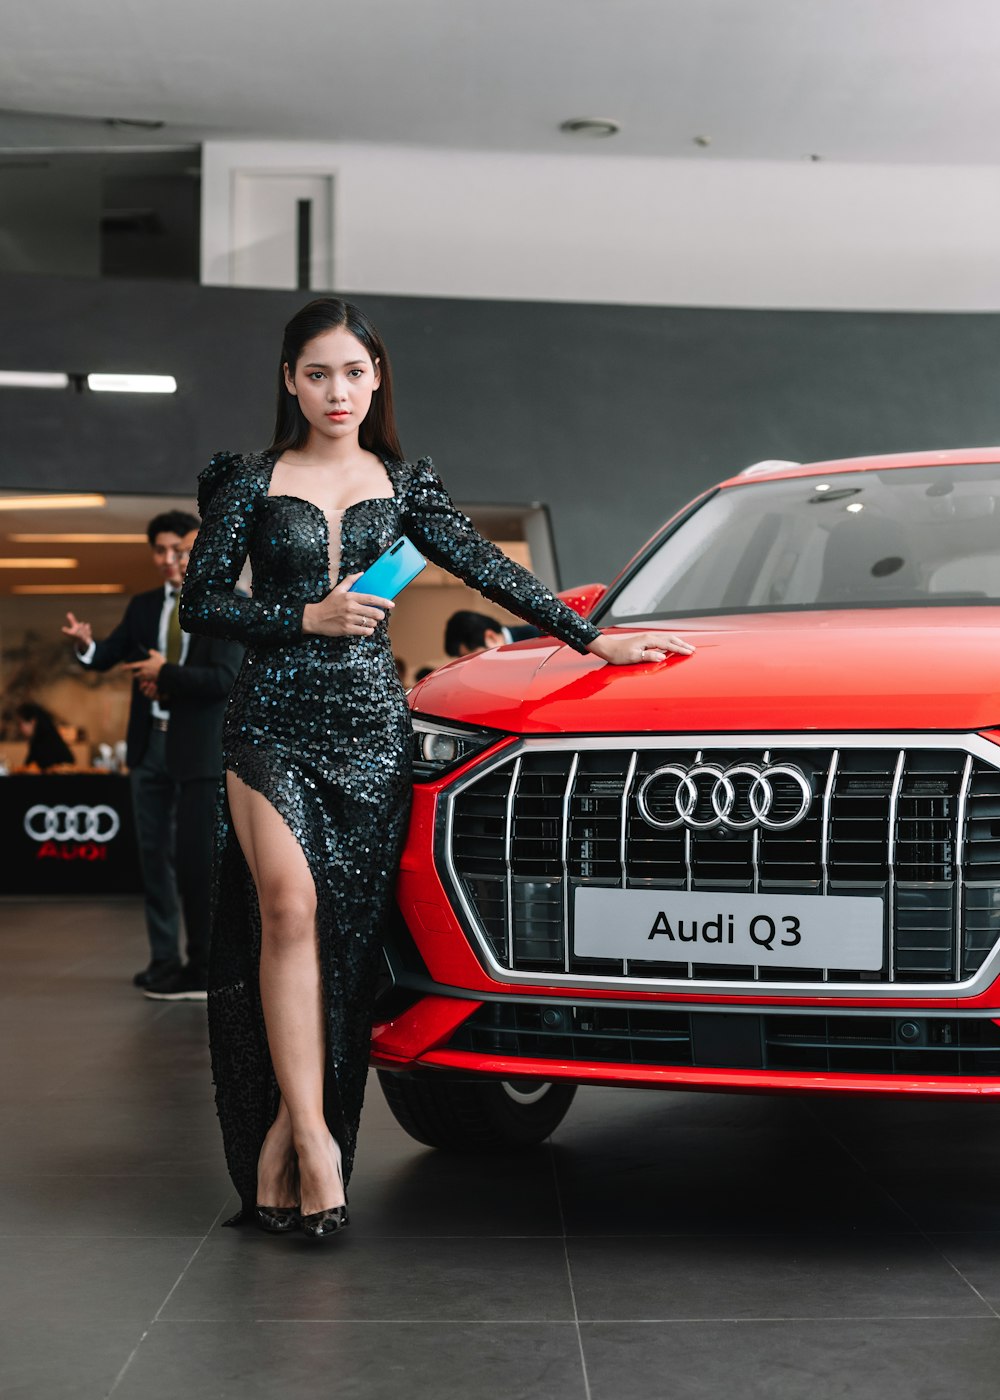 woman in black dress standing beside red audi car